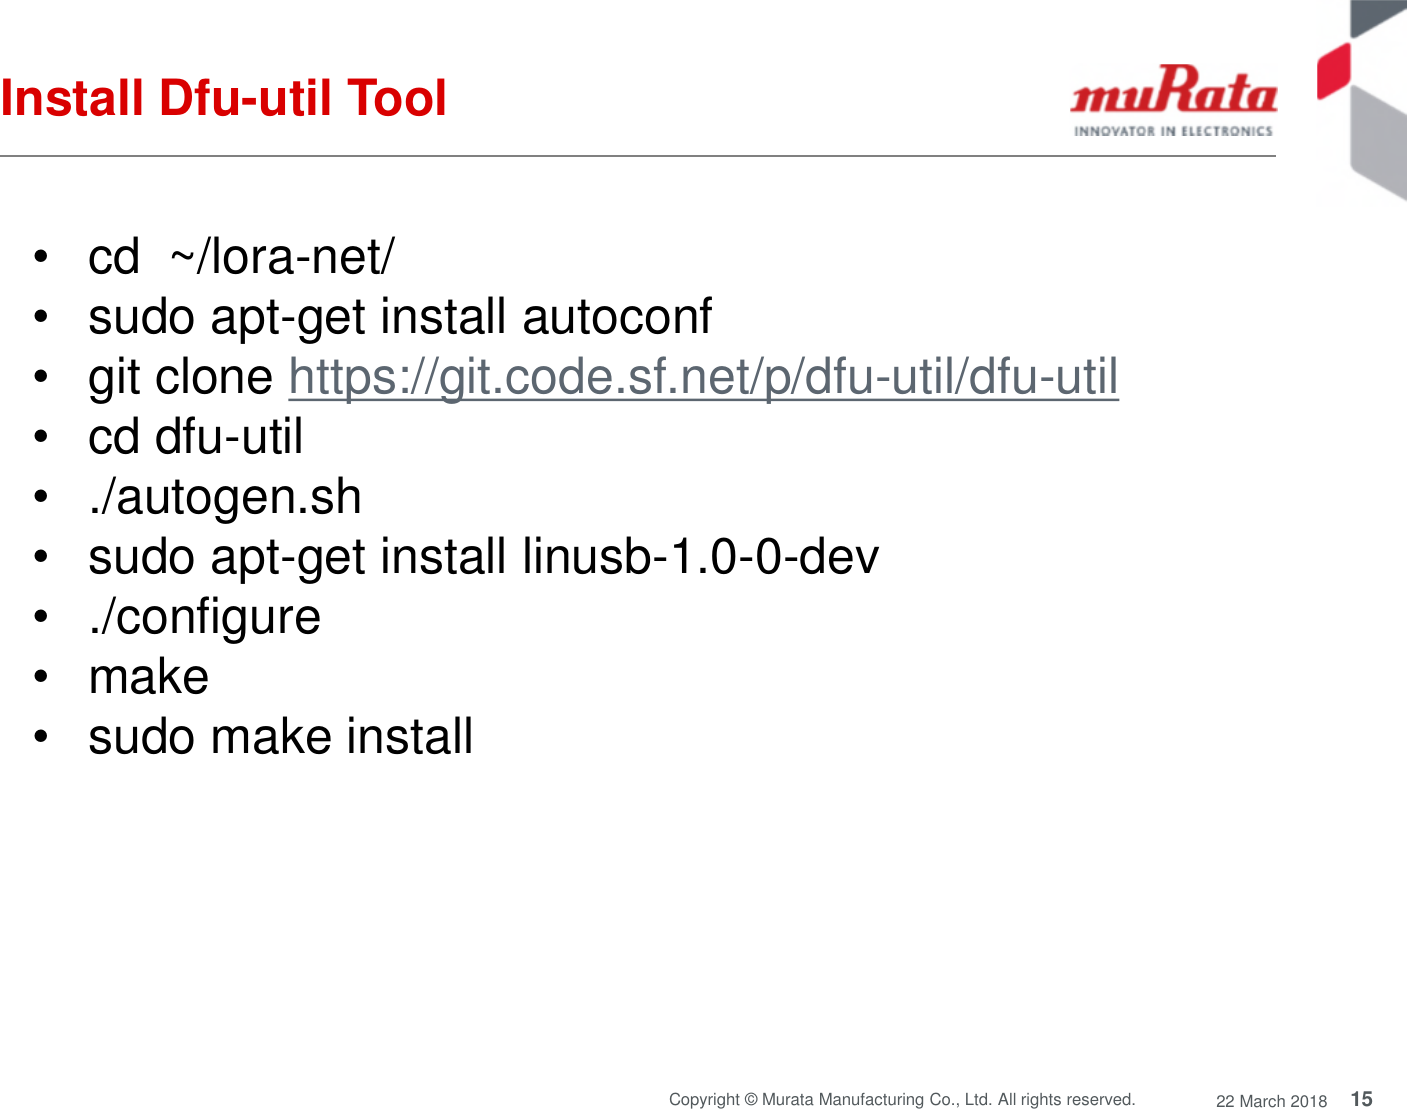 15Copyright © Murata Manufacturing Co., Ltd. All rights reserved. 22 March 2018Install Dfu-util Tool• cd ~/lora-net/• sudo apt-get install autoconf• git clone https://git.code.sf.net/p/dfu-util/dfu-util• cd dfu-util• ./autogen.sh• sudo apt-get install linusb-1.0-0-dev• ./configure• make• sudo make install